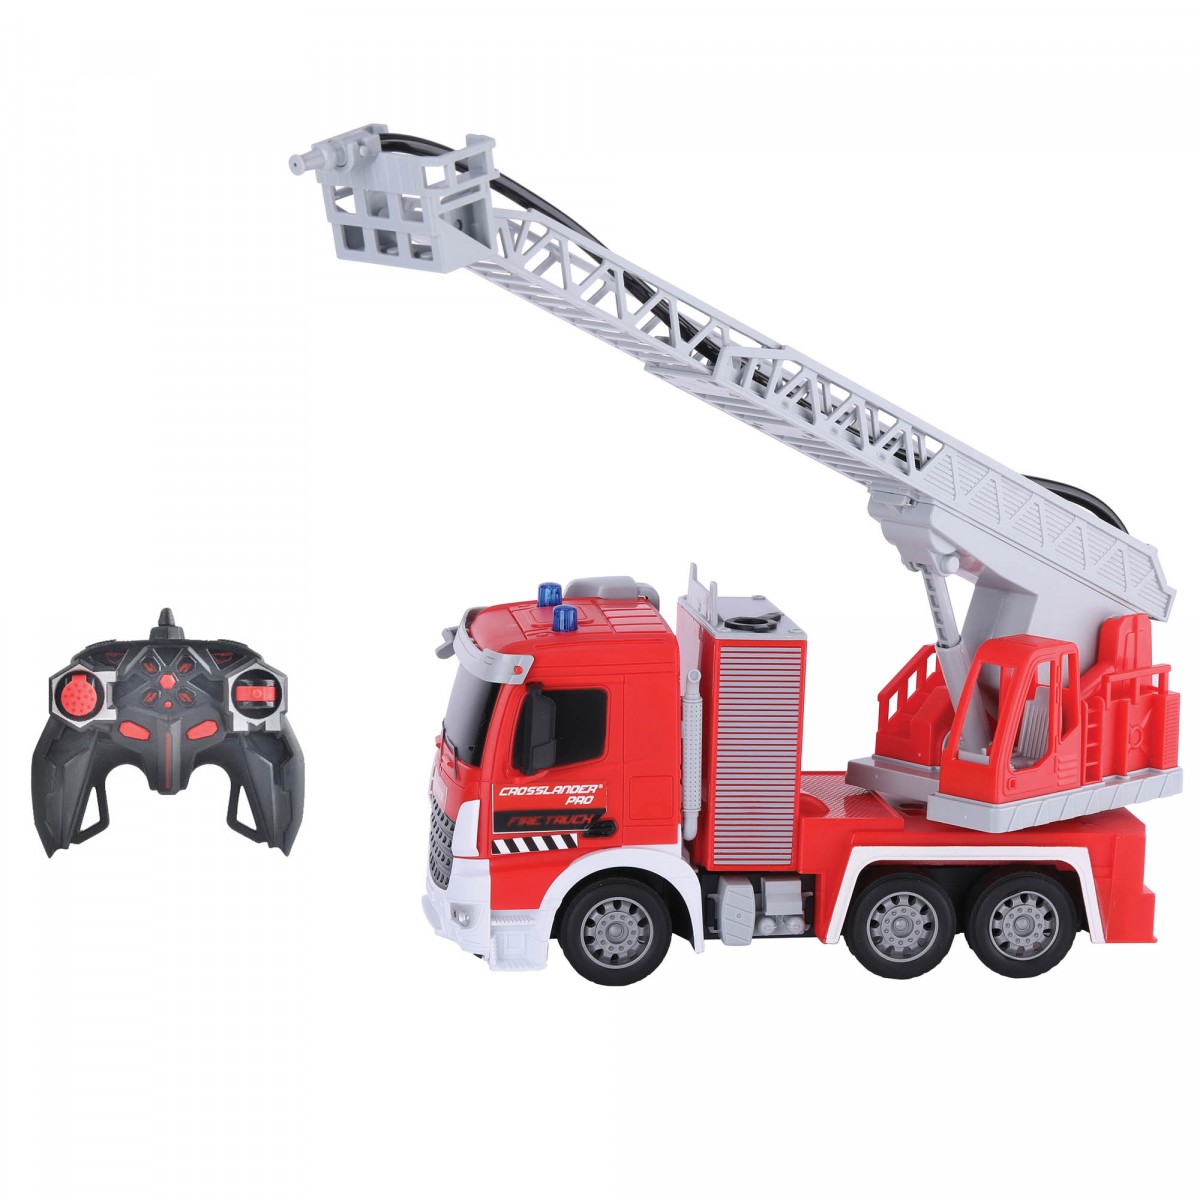 Crosslander® pro RC Fire Truck - remote controlled fire truck